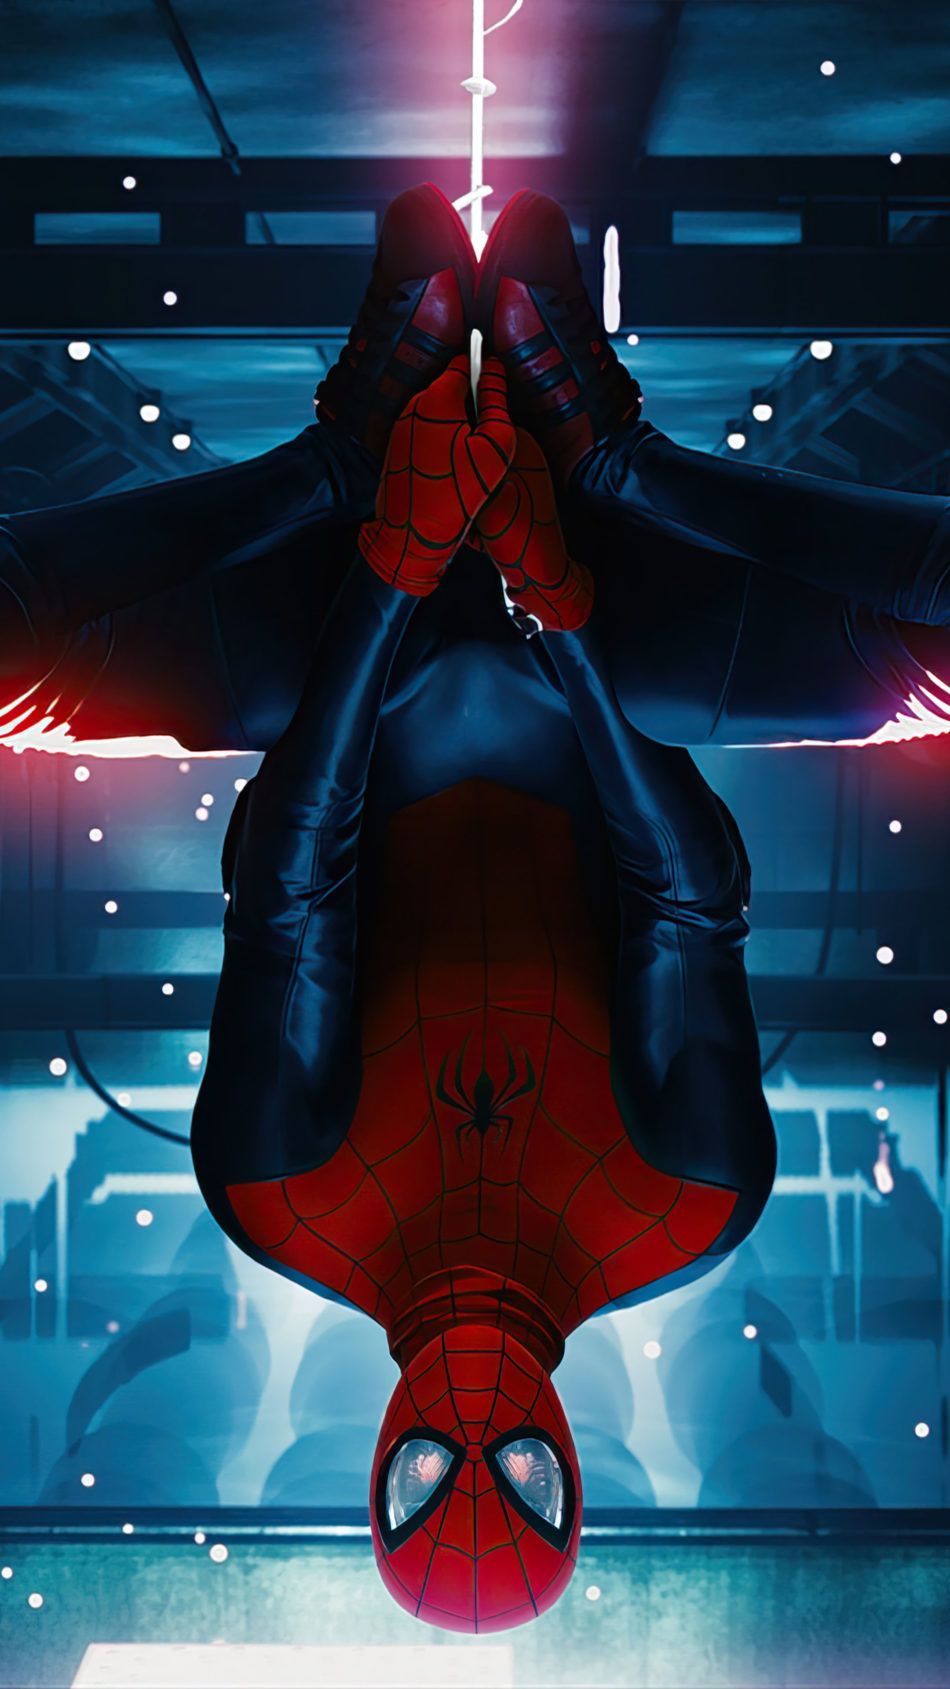 Spider Man Miles Morales Hanging Upside Down 4K Ultra HD Mobile Wallpaper. Spiderman, Spiderman Comic, Marvel Comics Wallpaper